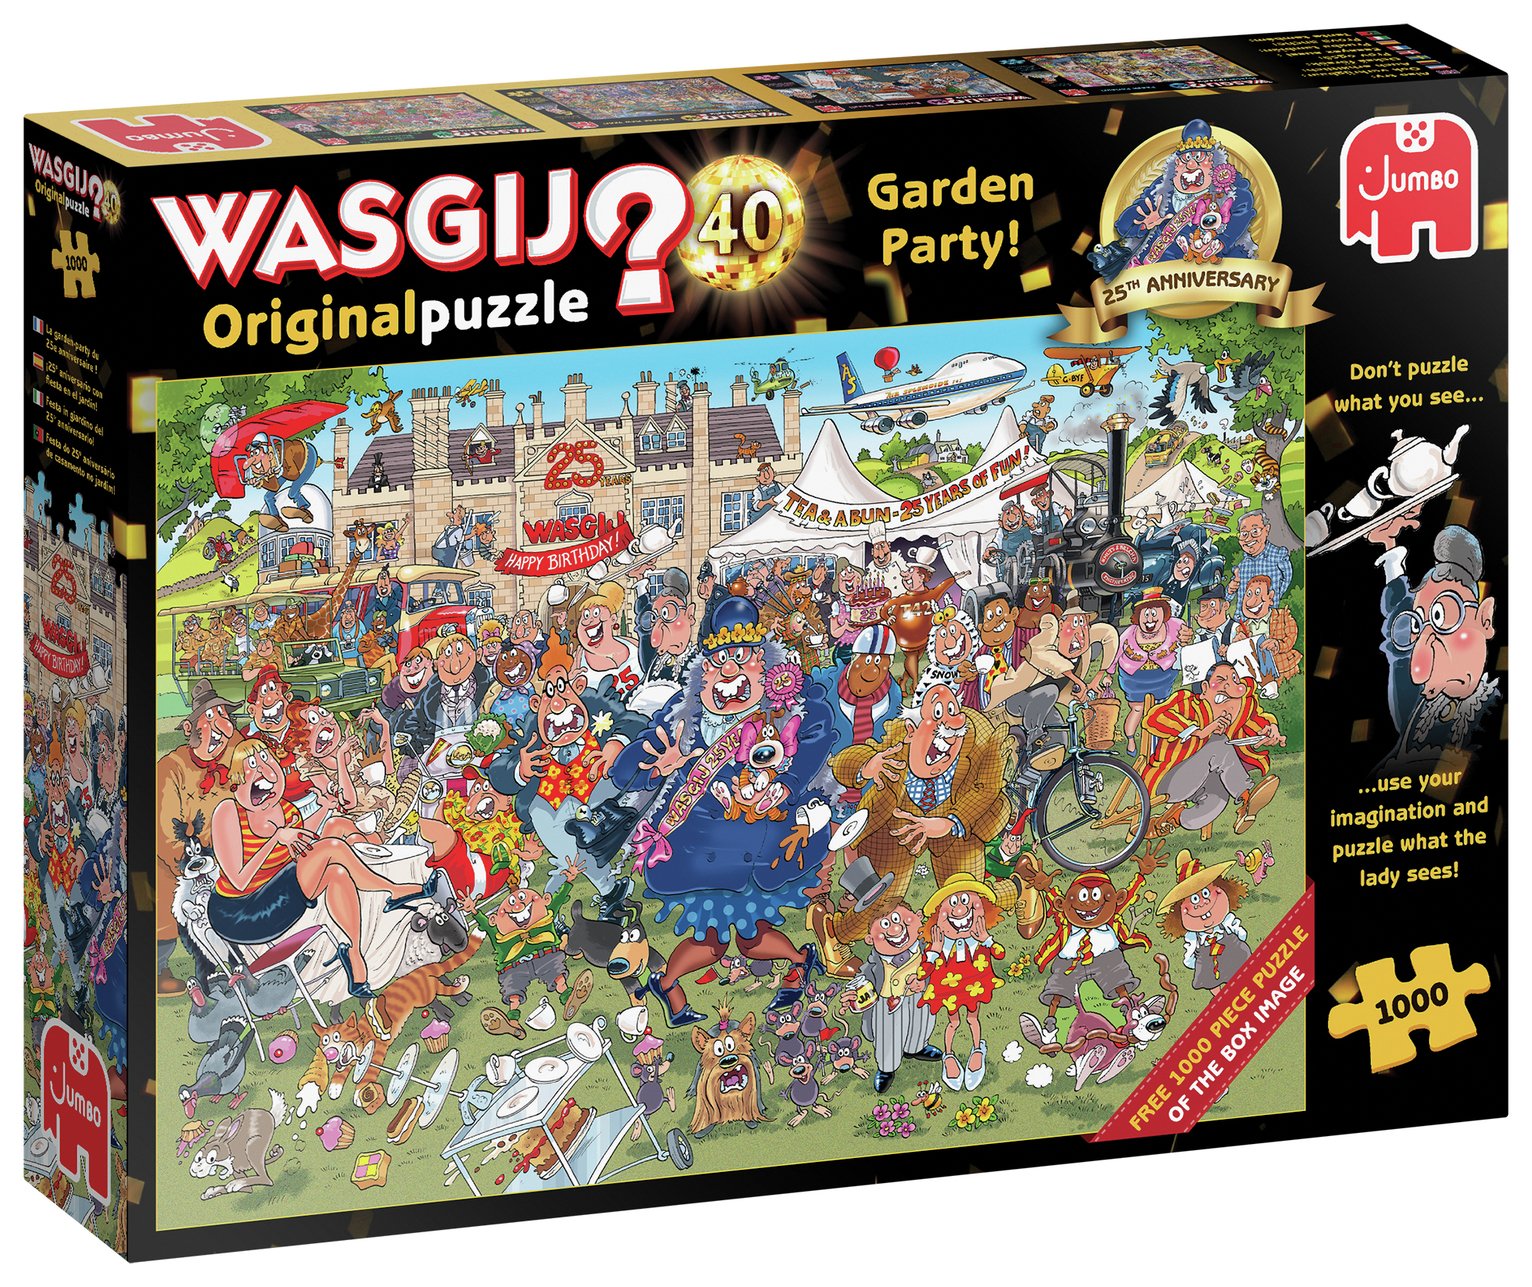 Wasgij Original 40, 25th Anniversary Garden Party Puzzle